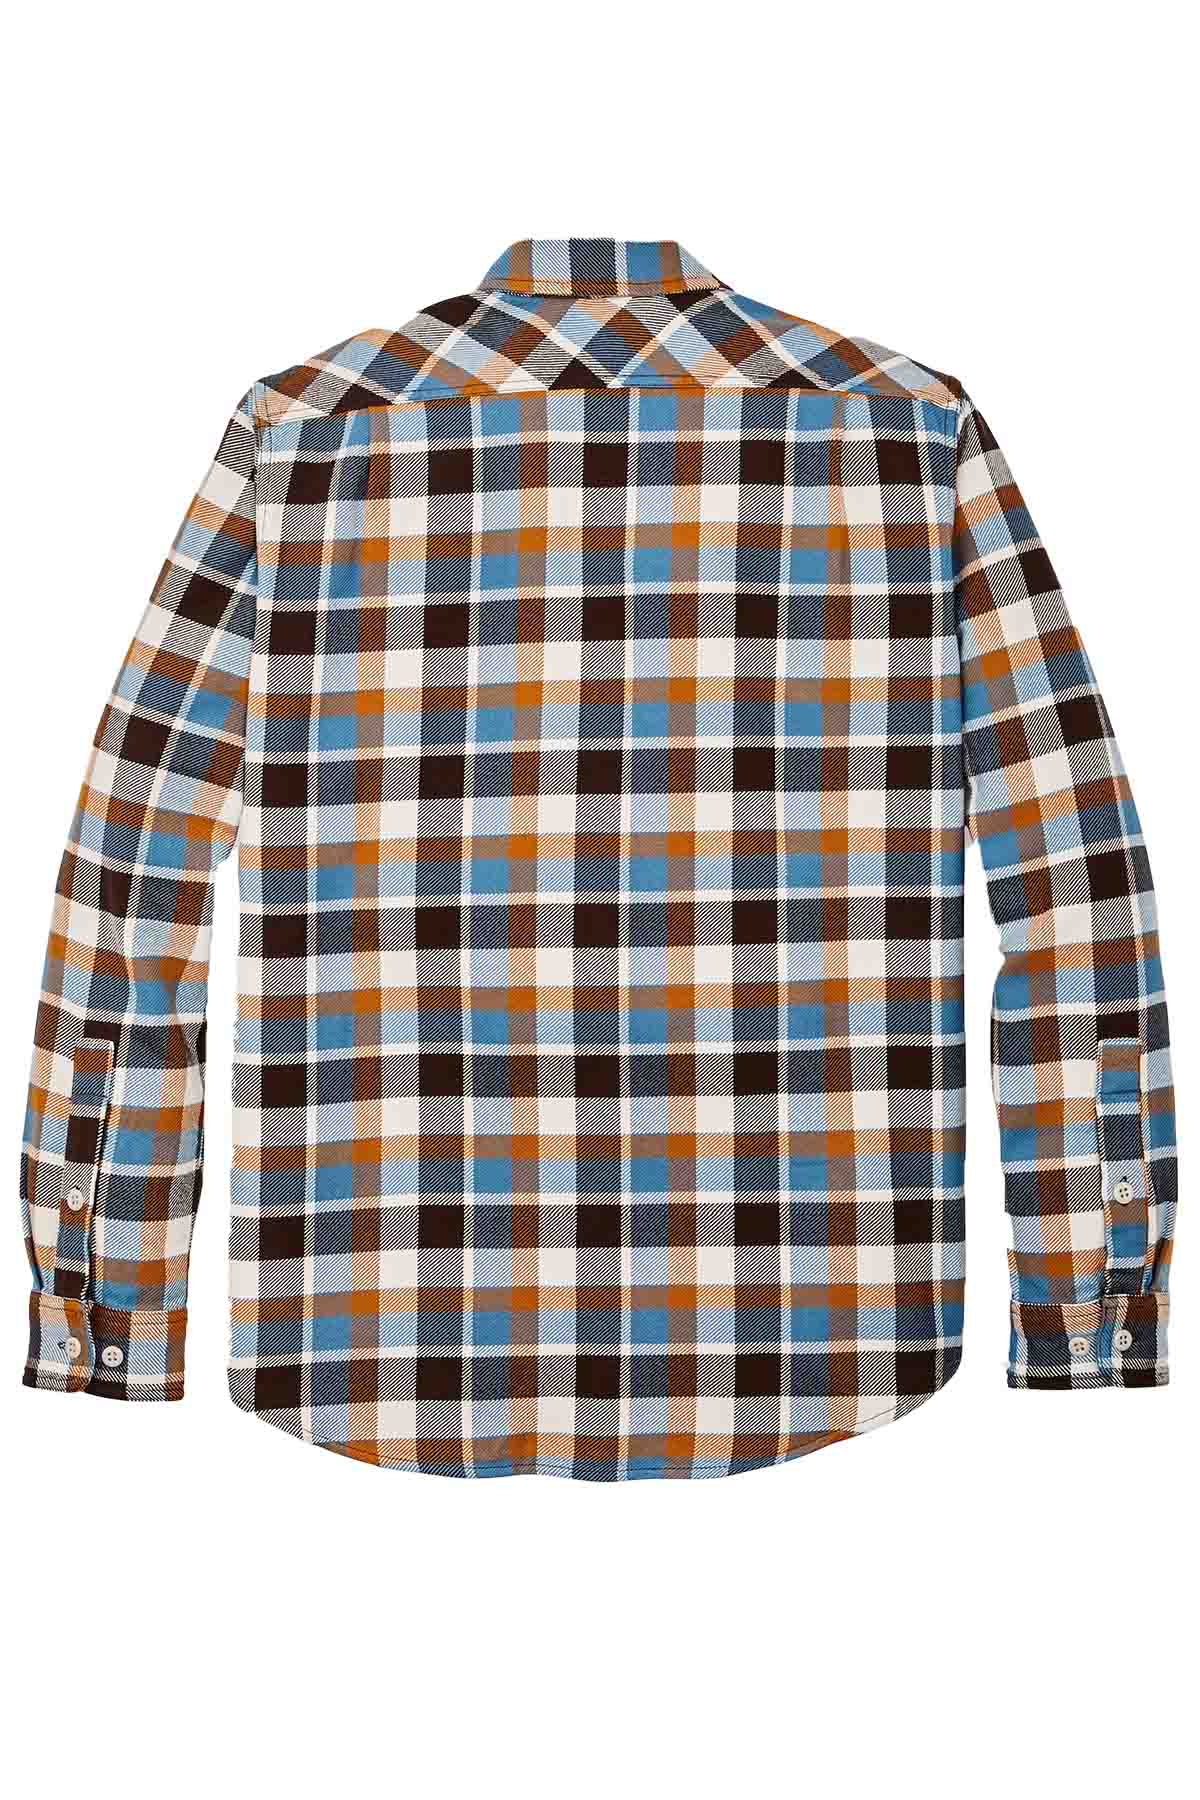 Filson - Vintage Flannel Workshirt - Brown/Cream/Ochre/Blue Plaid - Back